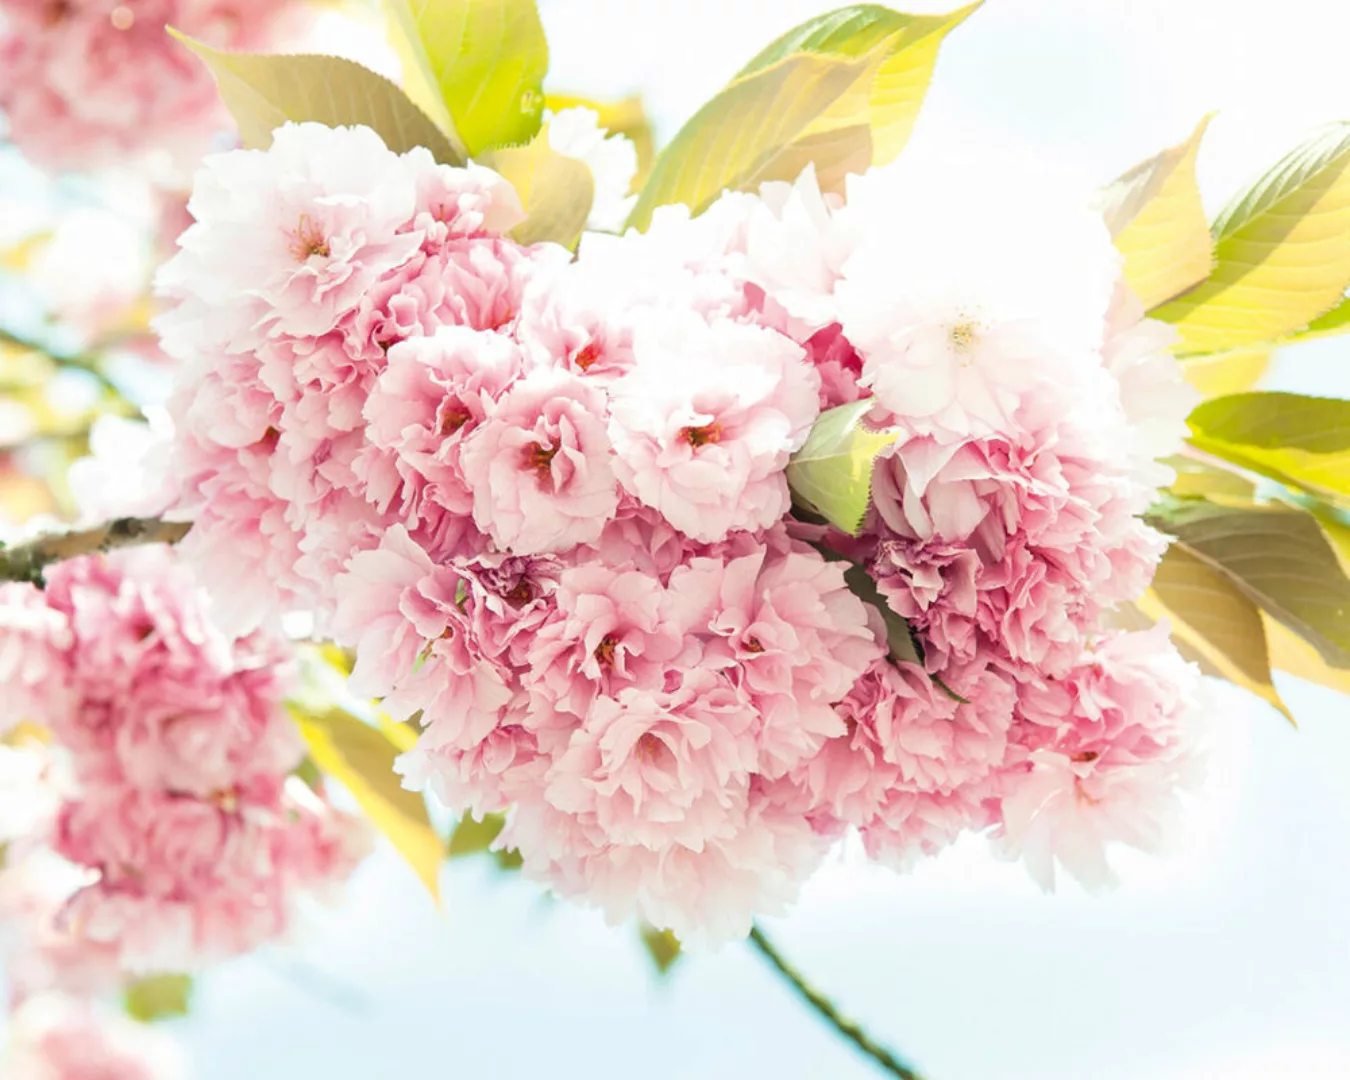 Fototapete "Frhling rosa" 4,00x2,50 m / Glattvlies Perlmutt günstig online kaufen